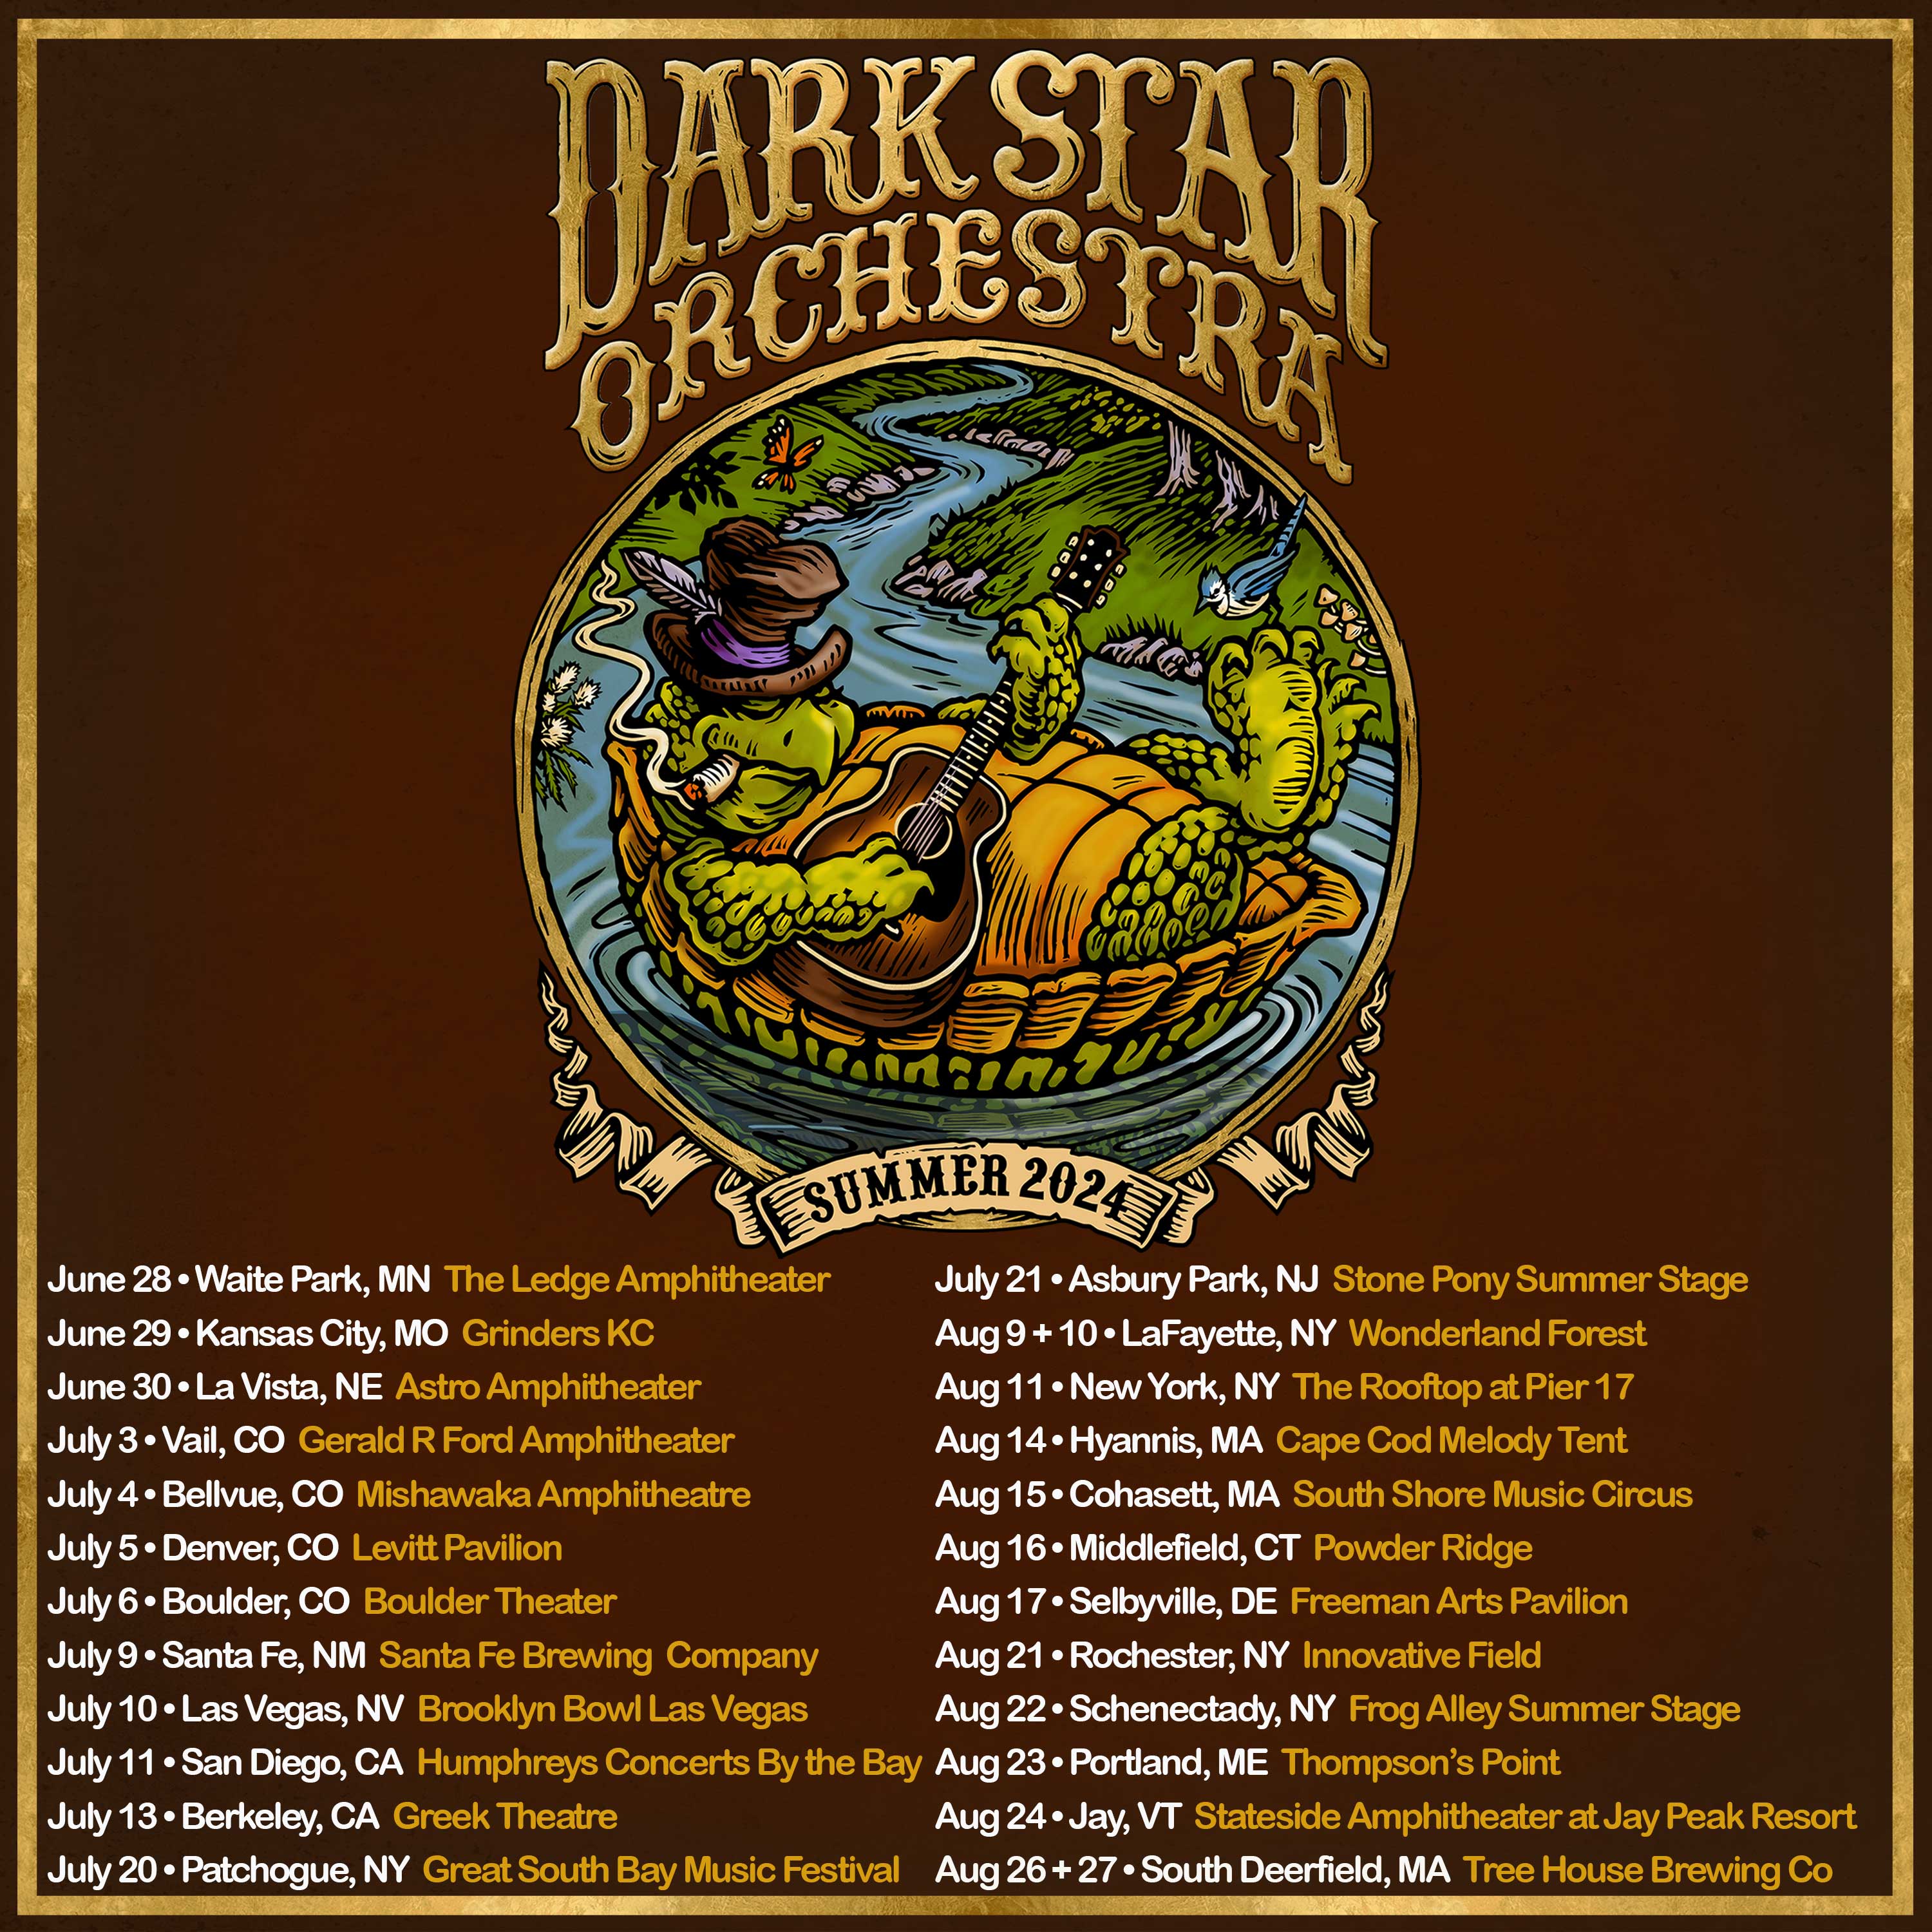 Dark Star Orchestra's Full Summer Tour Announced